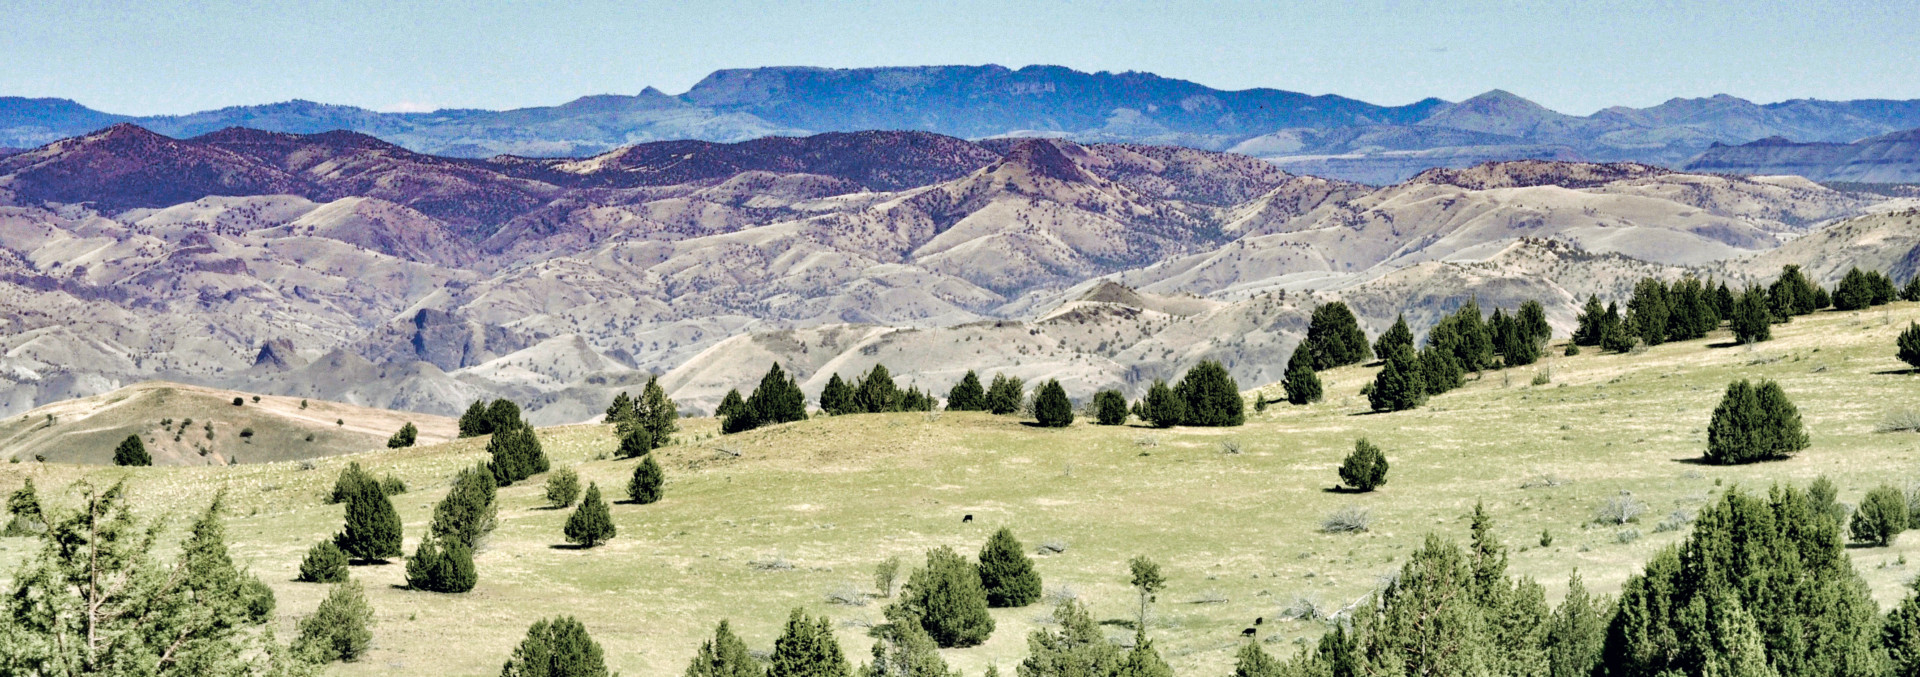 Oregon Ranch Land For Sale John Day Breaks Pasture